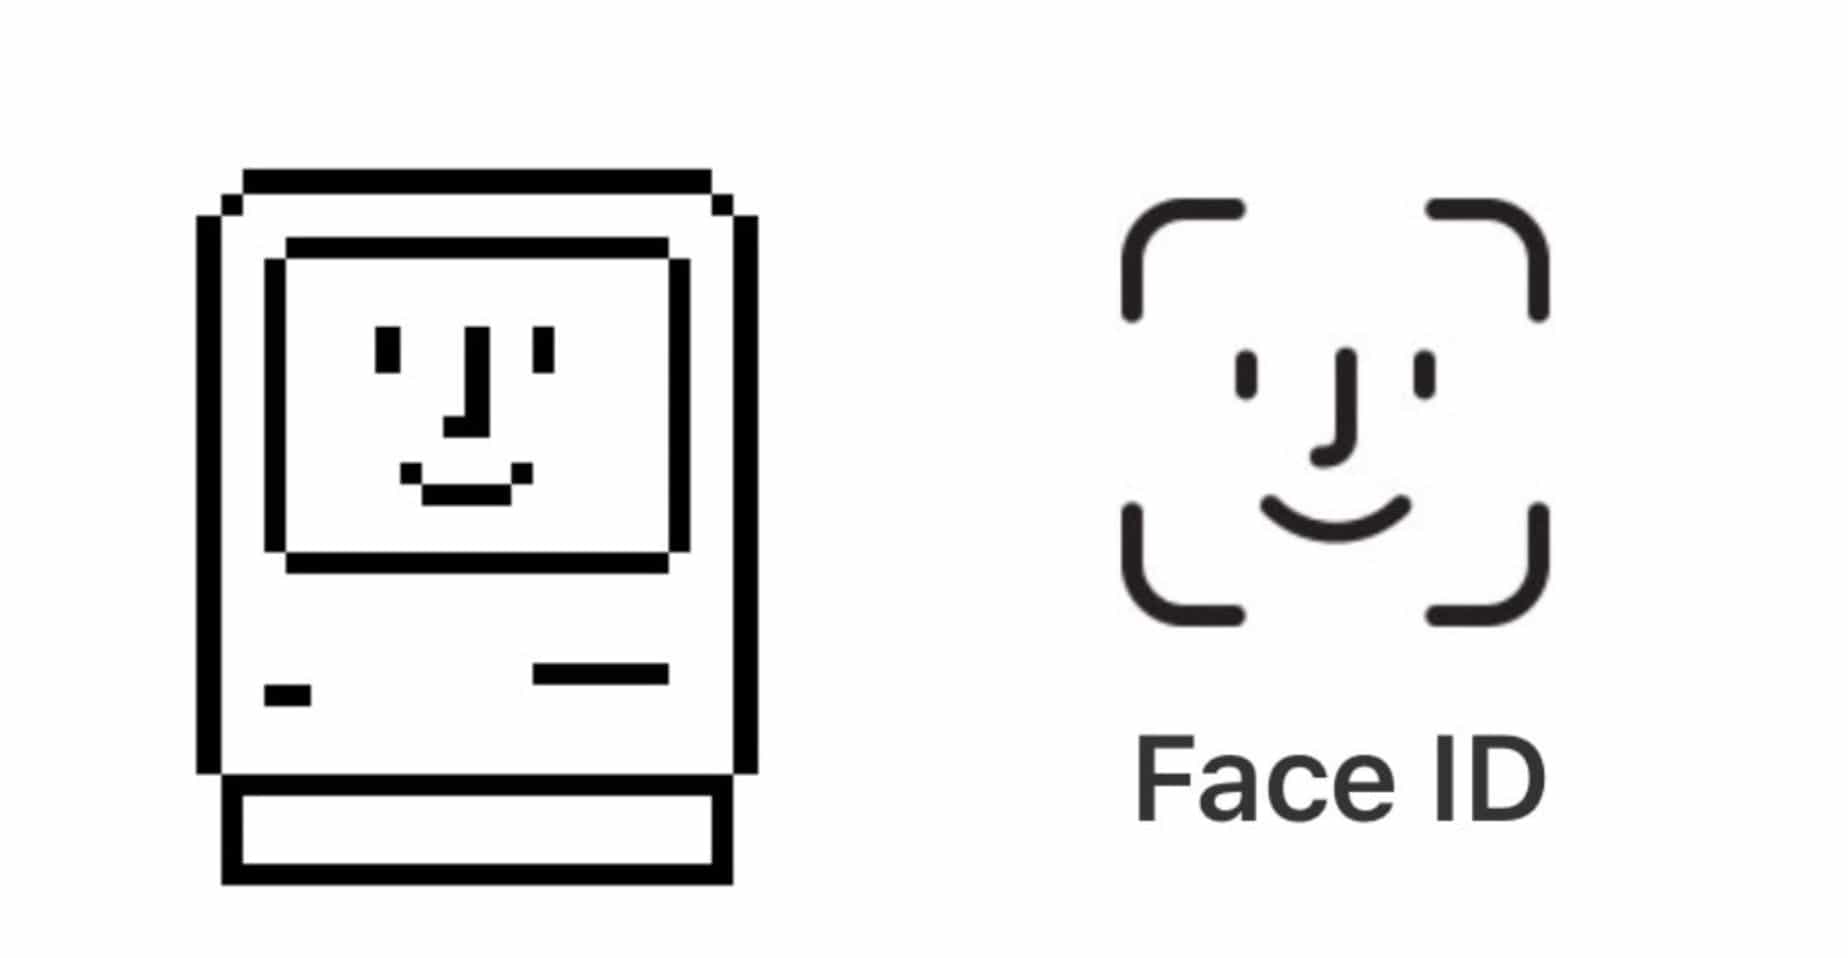 Apple Smile Logo - Face ID logo resurrects a classic Macintosh icon | Cult of Mac